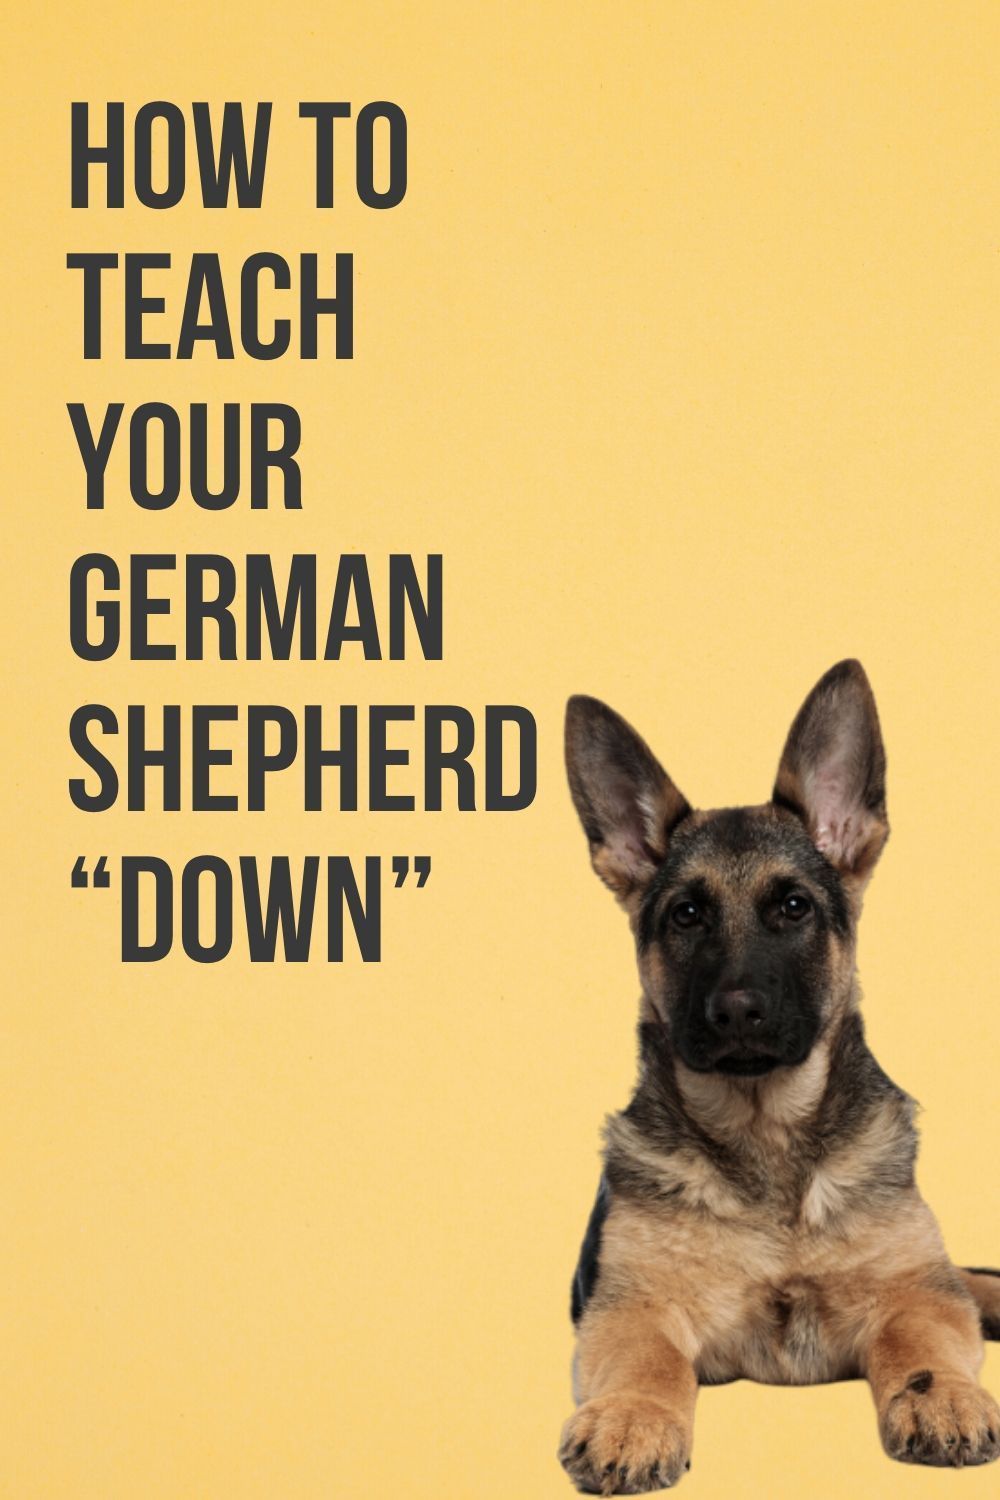 How To Train Your German Shepherd "Down"